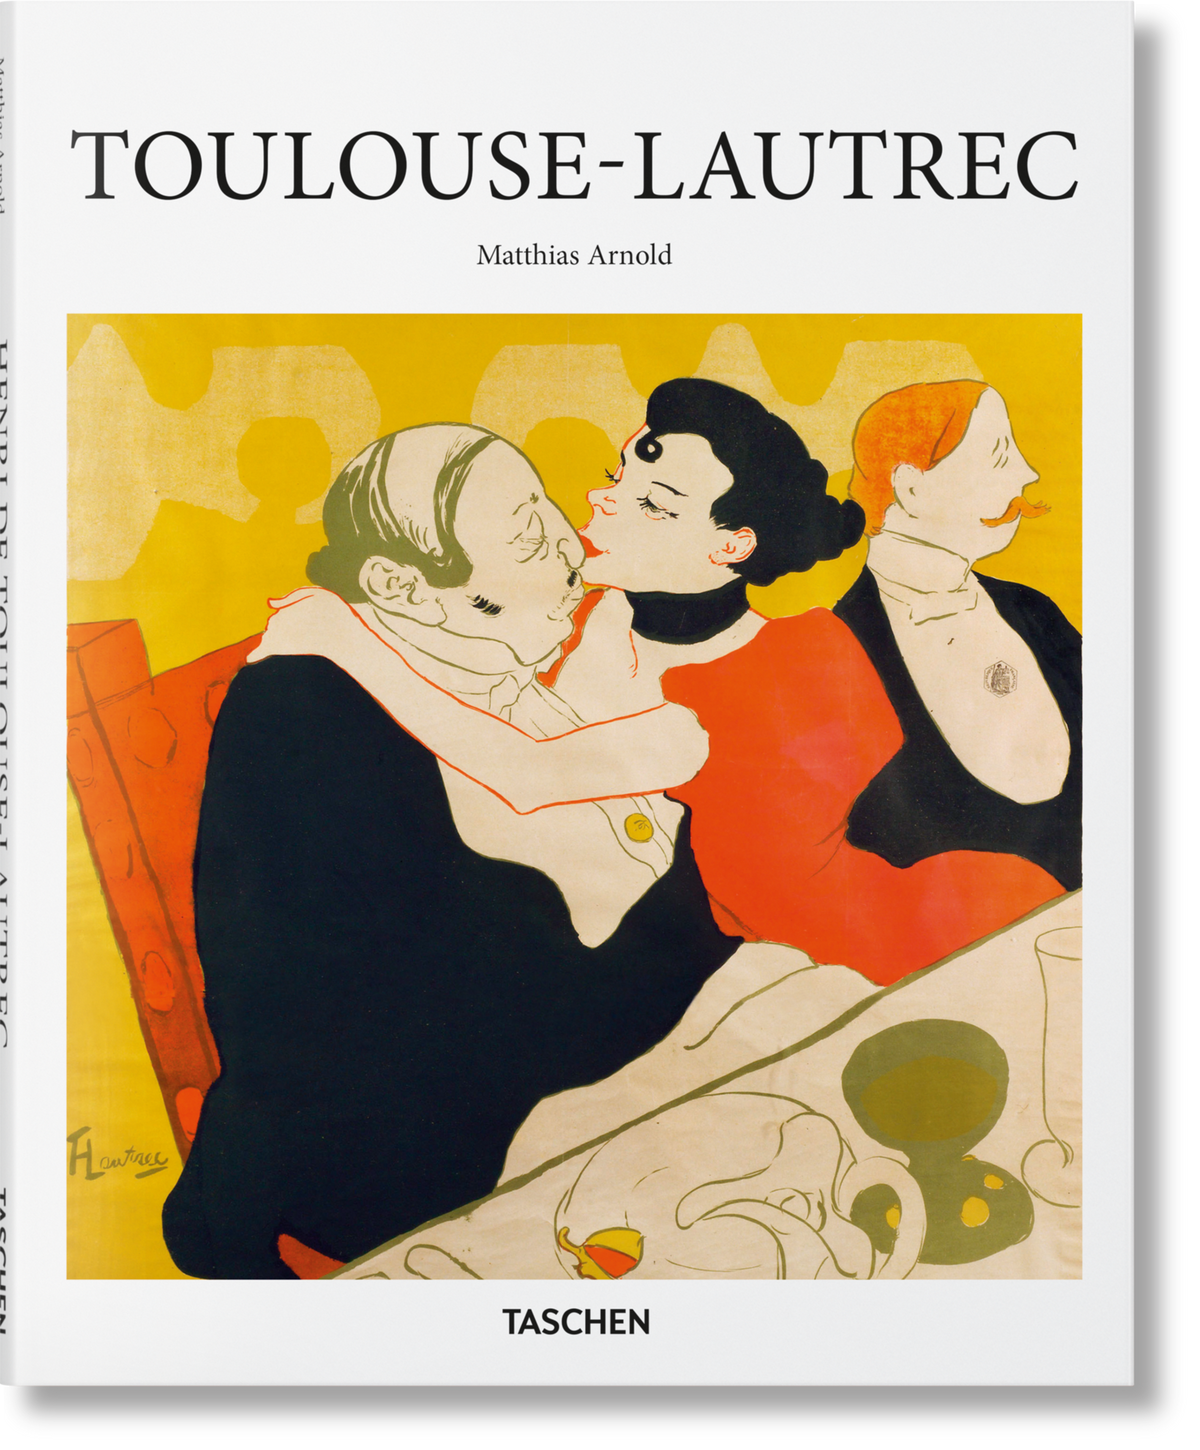 Toulouse-Lautrec by Matthias Arnold